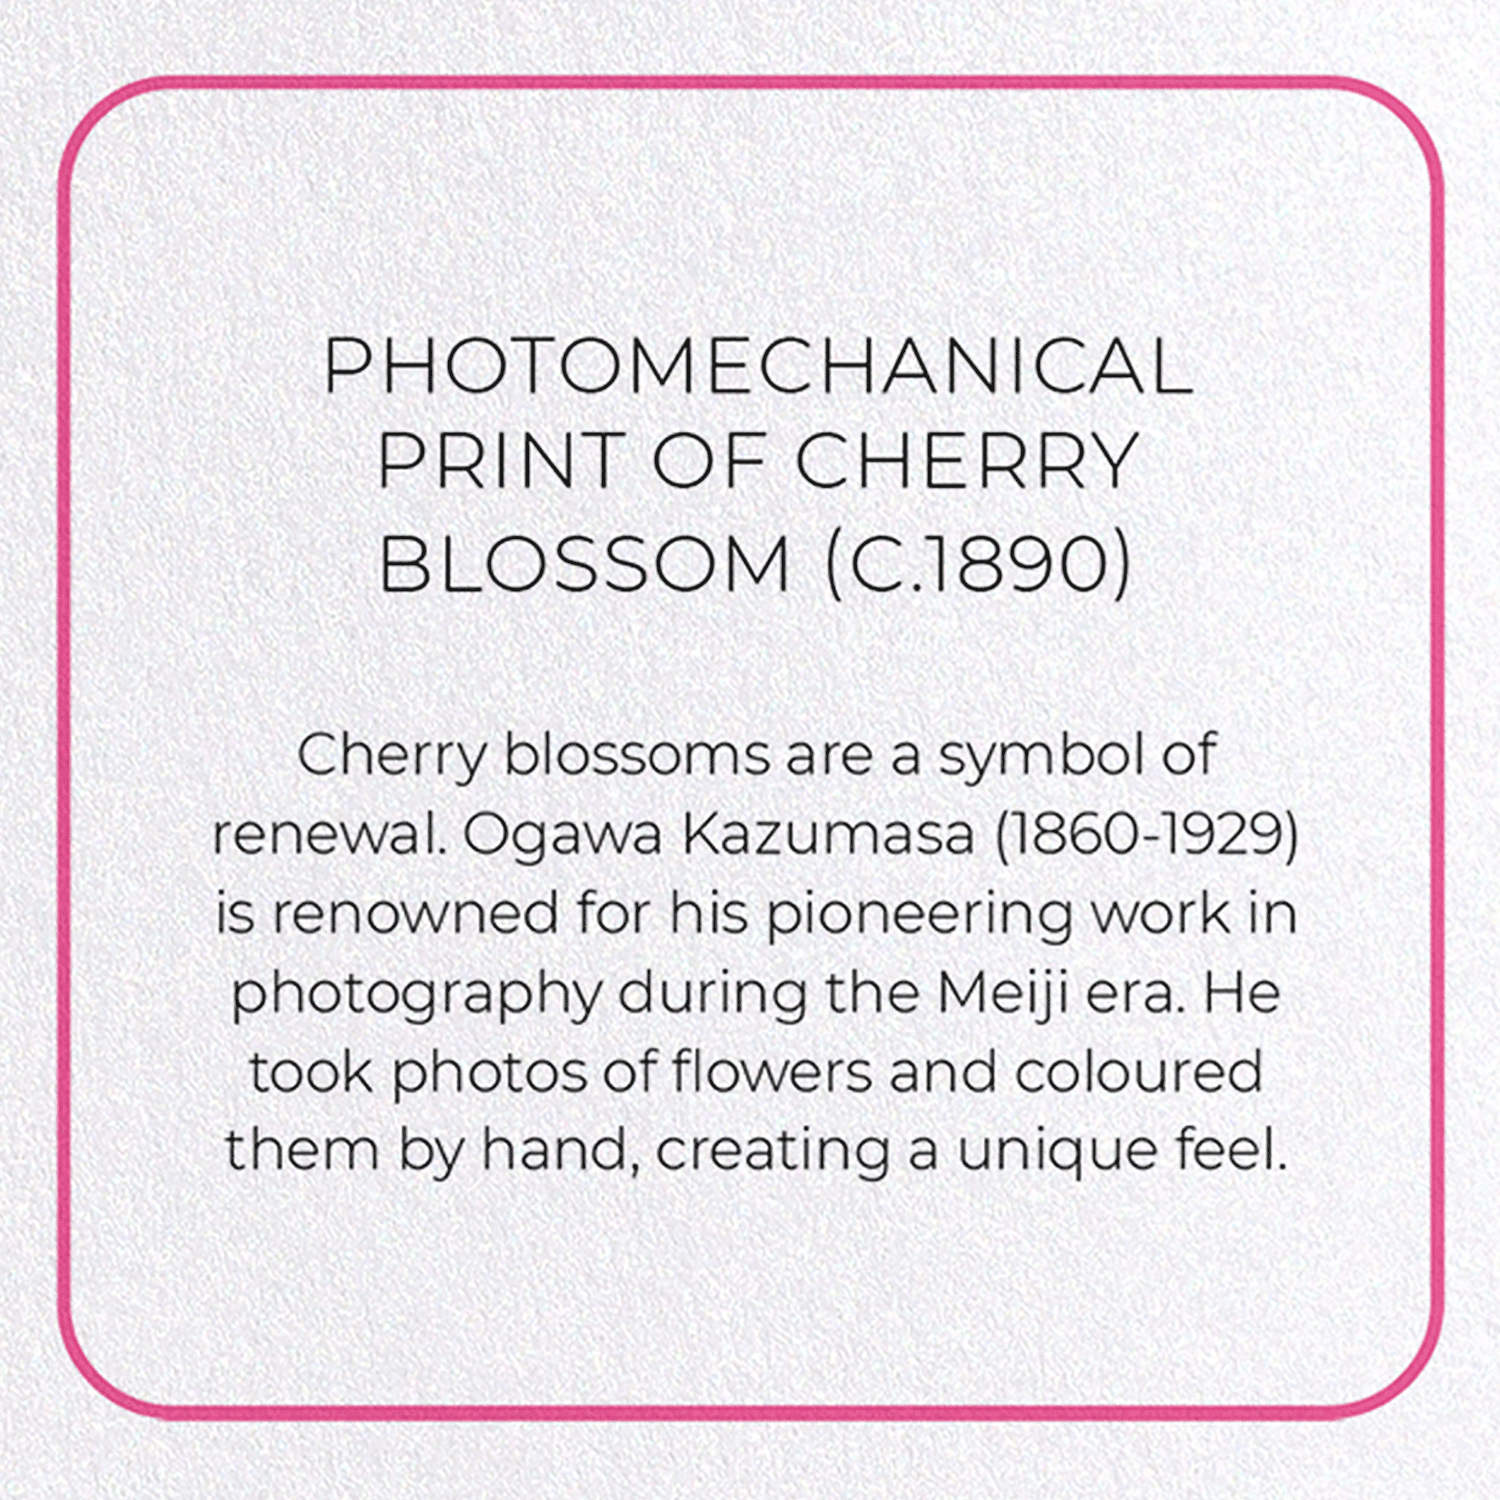 PHOTOMECHANICAL PRINT OF CHERRY BLOSSOM (C.1890)